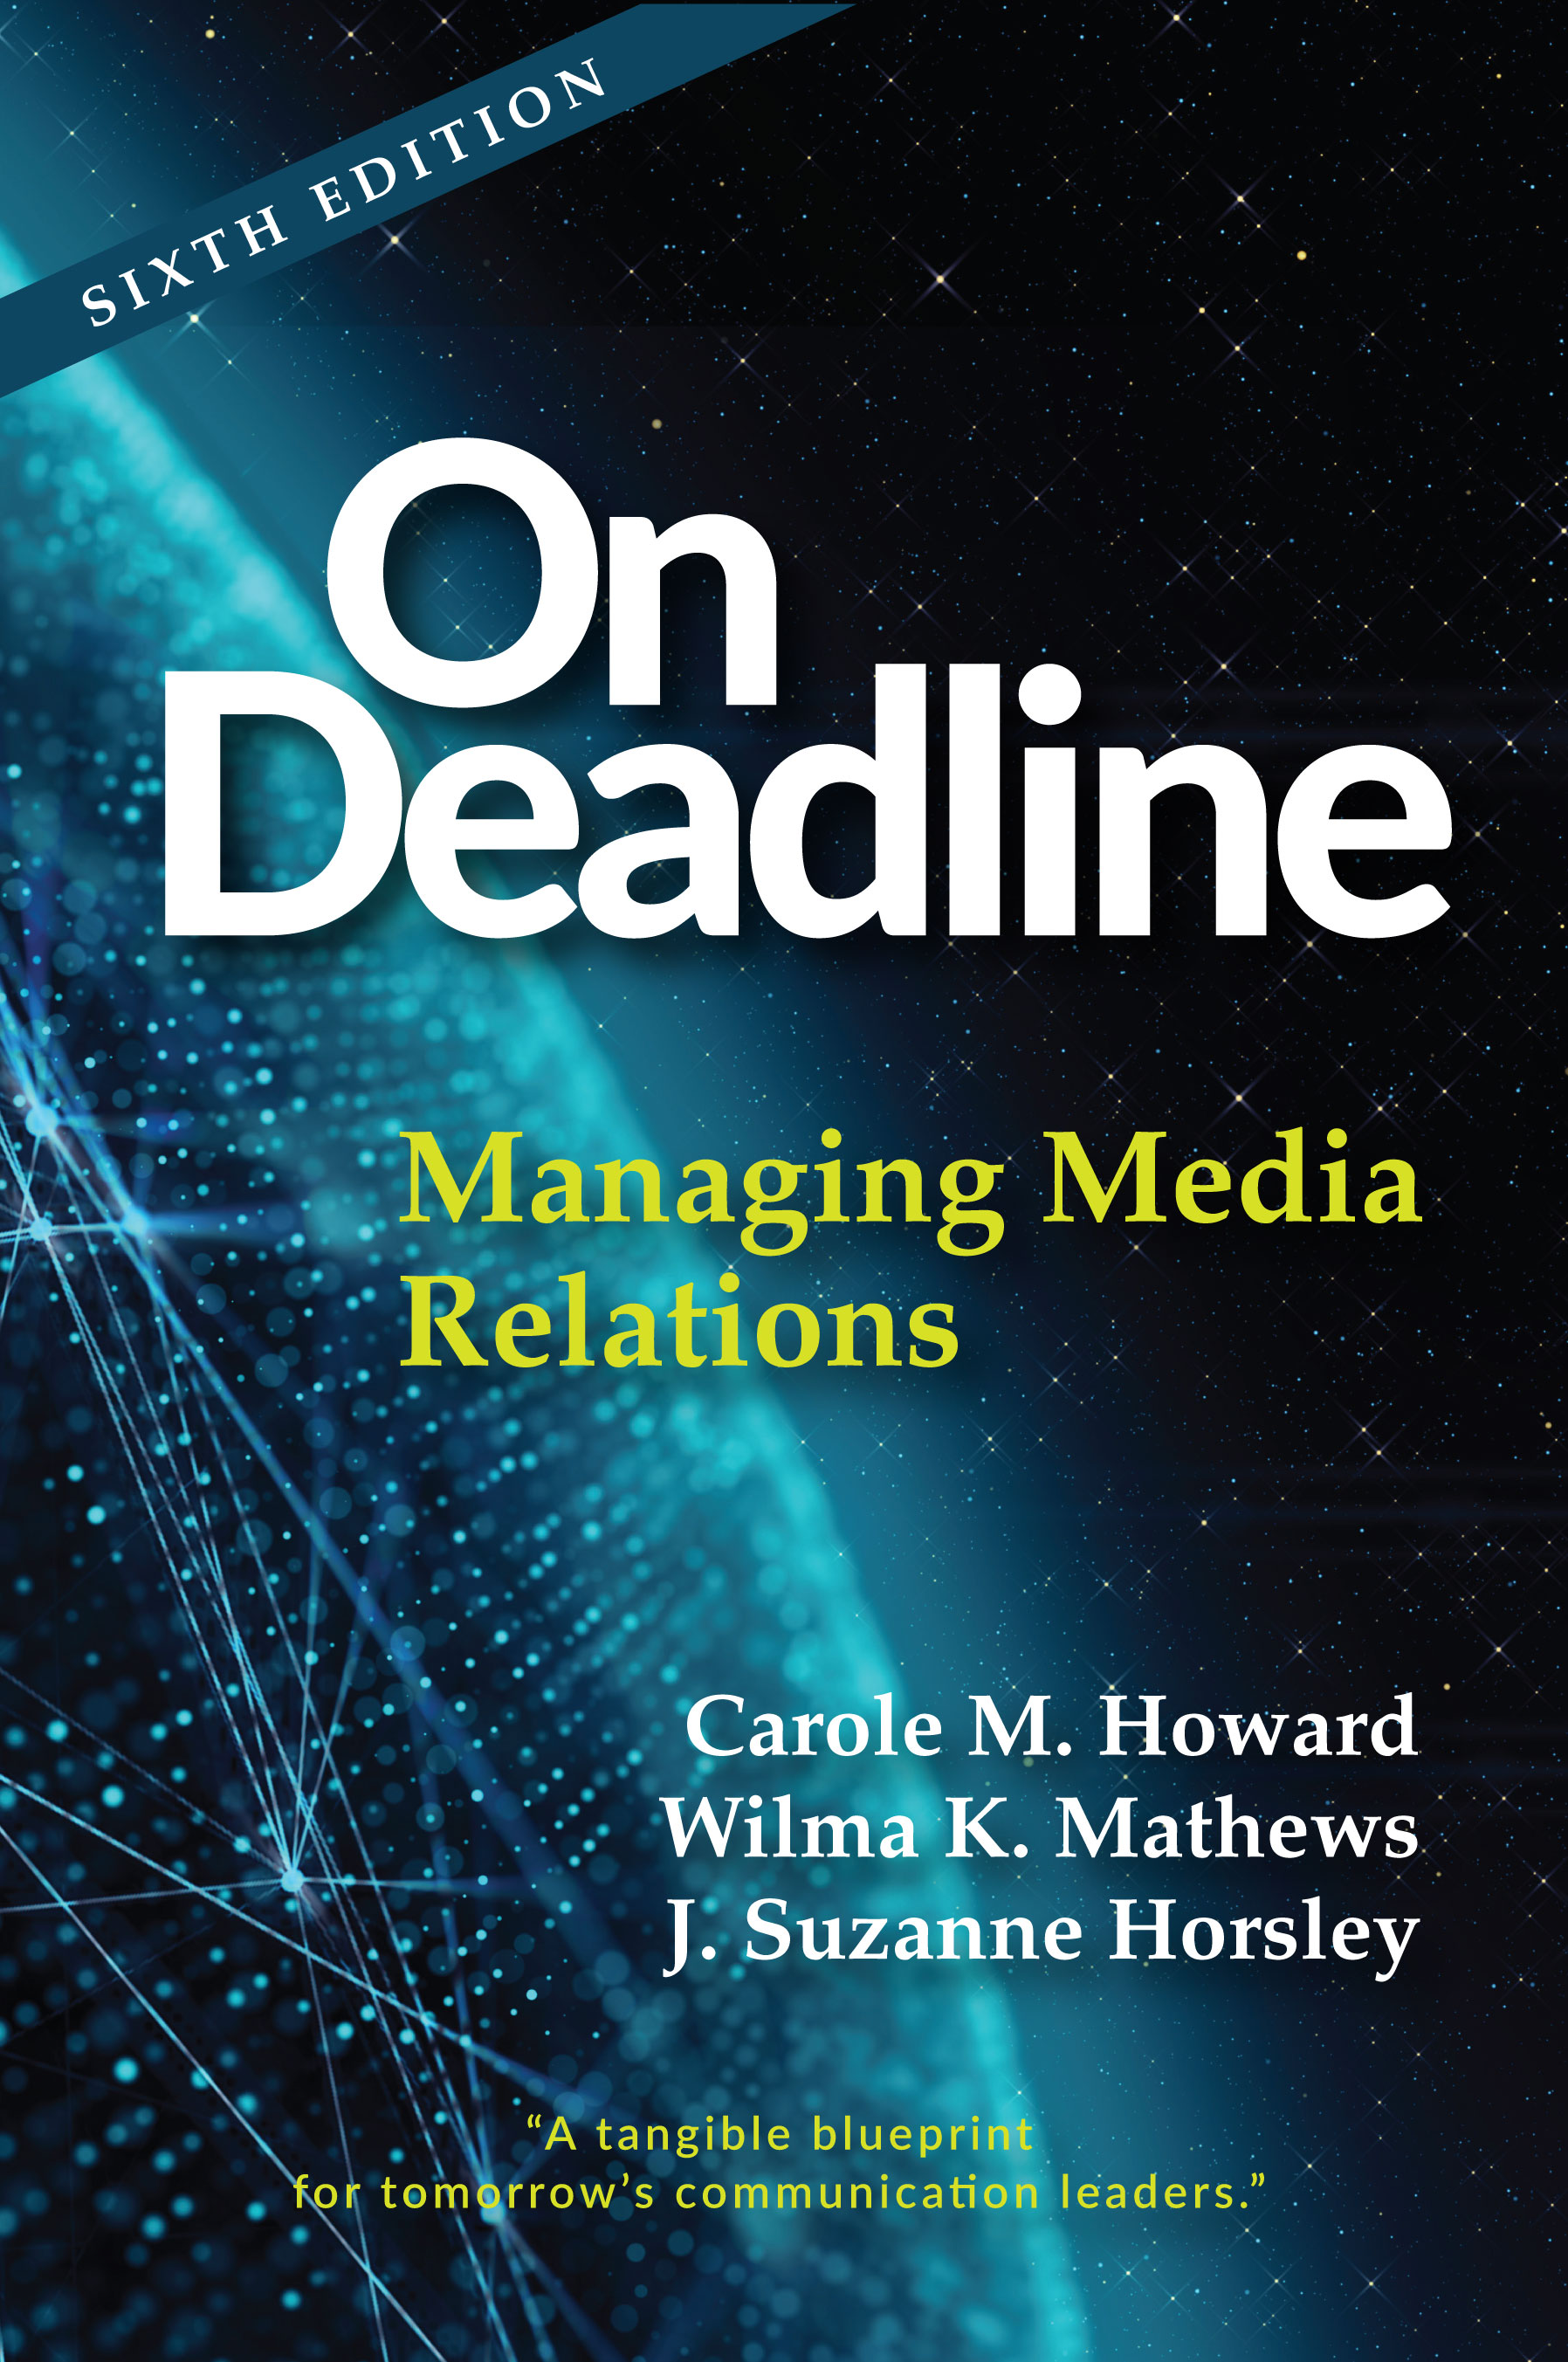 On Deadline: Managing Media Relations by Carole M. Howard, Wilma K. Mathews, J. Suzanne Horsley